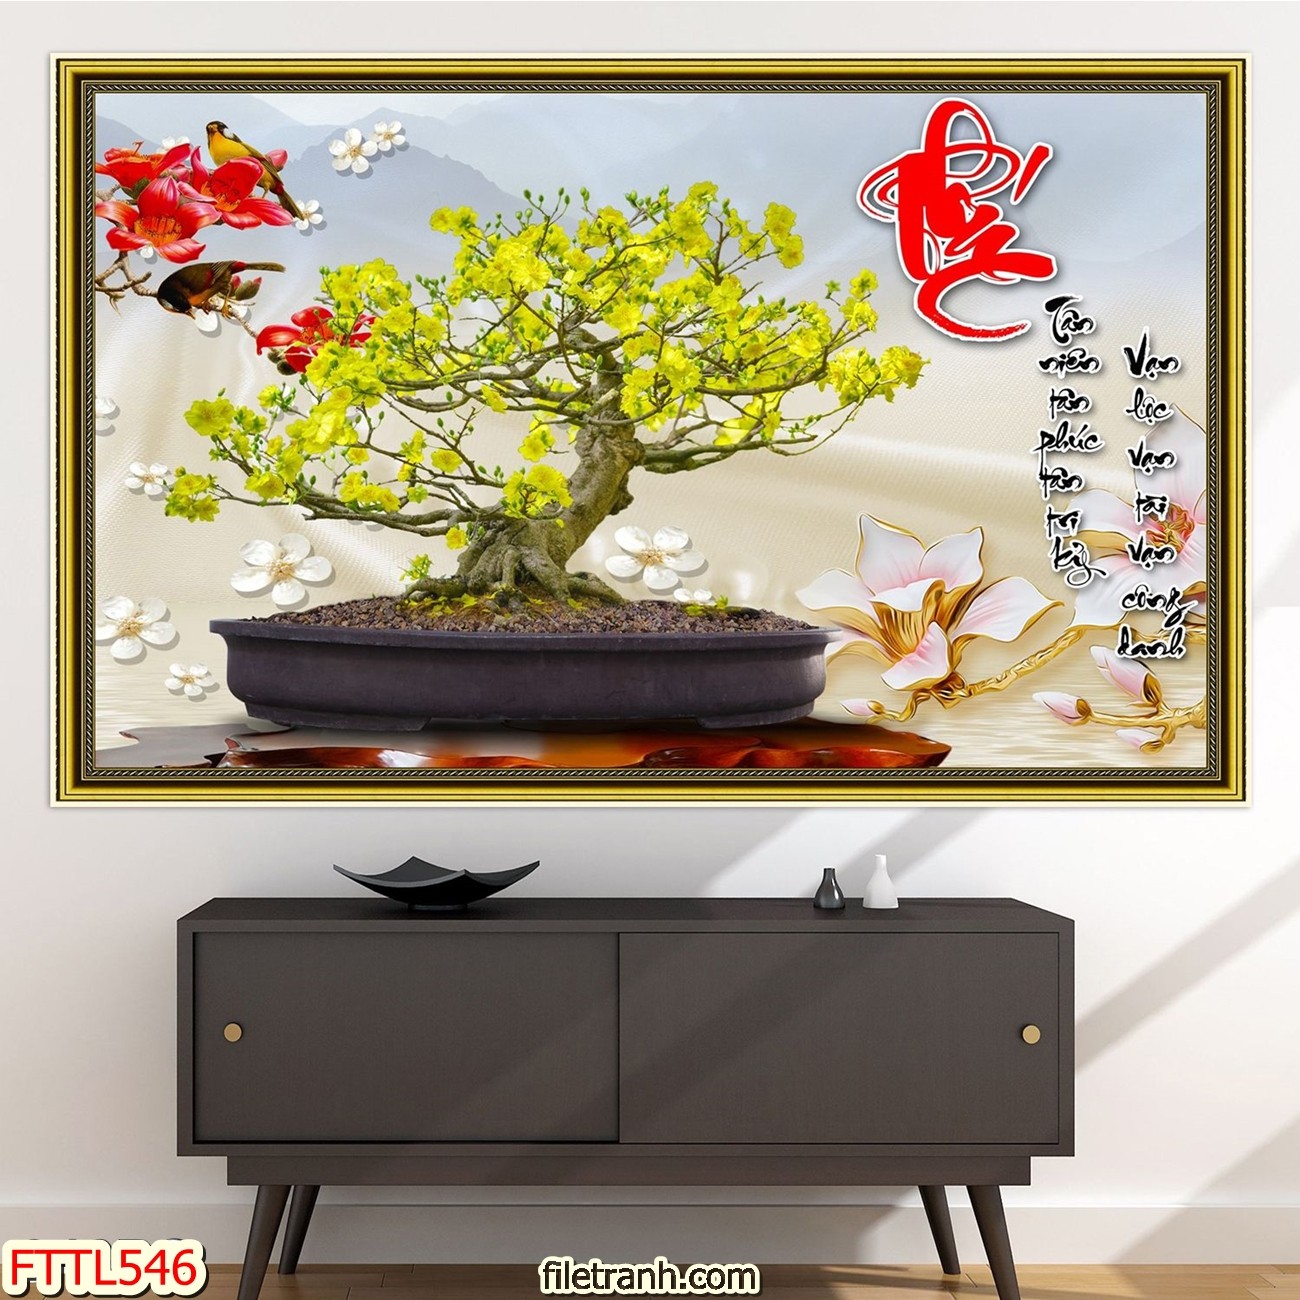 https://filetranh.com/file-tranh-chau-mai-bonsai/file-tranh-chau-mai-bonsai-fttl546.html